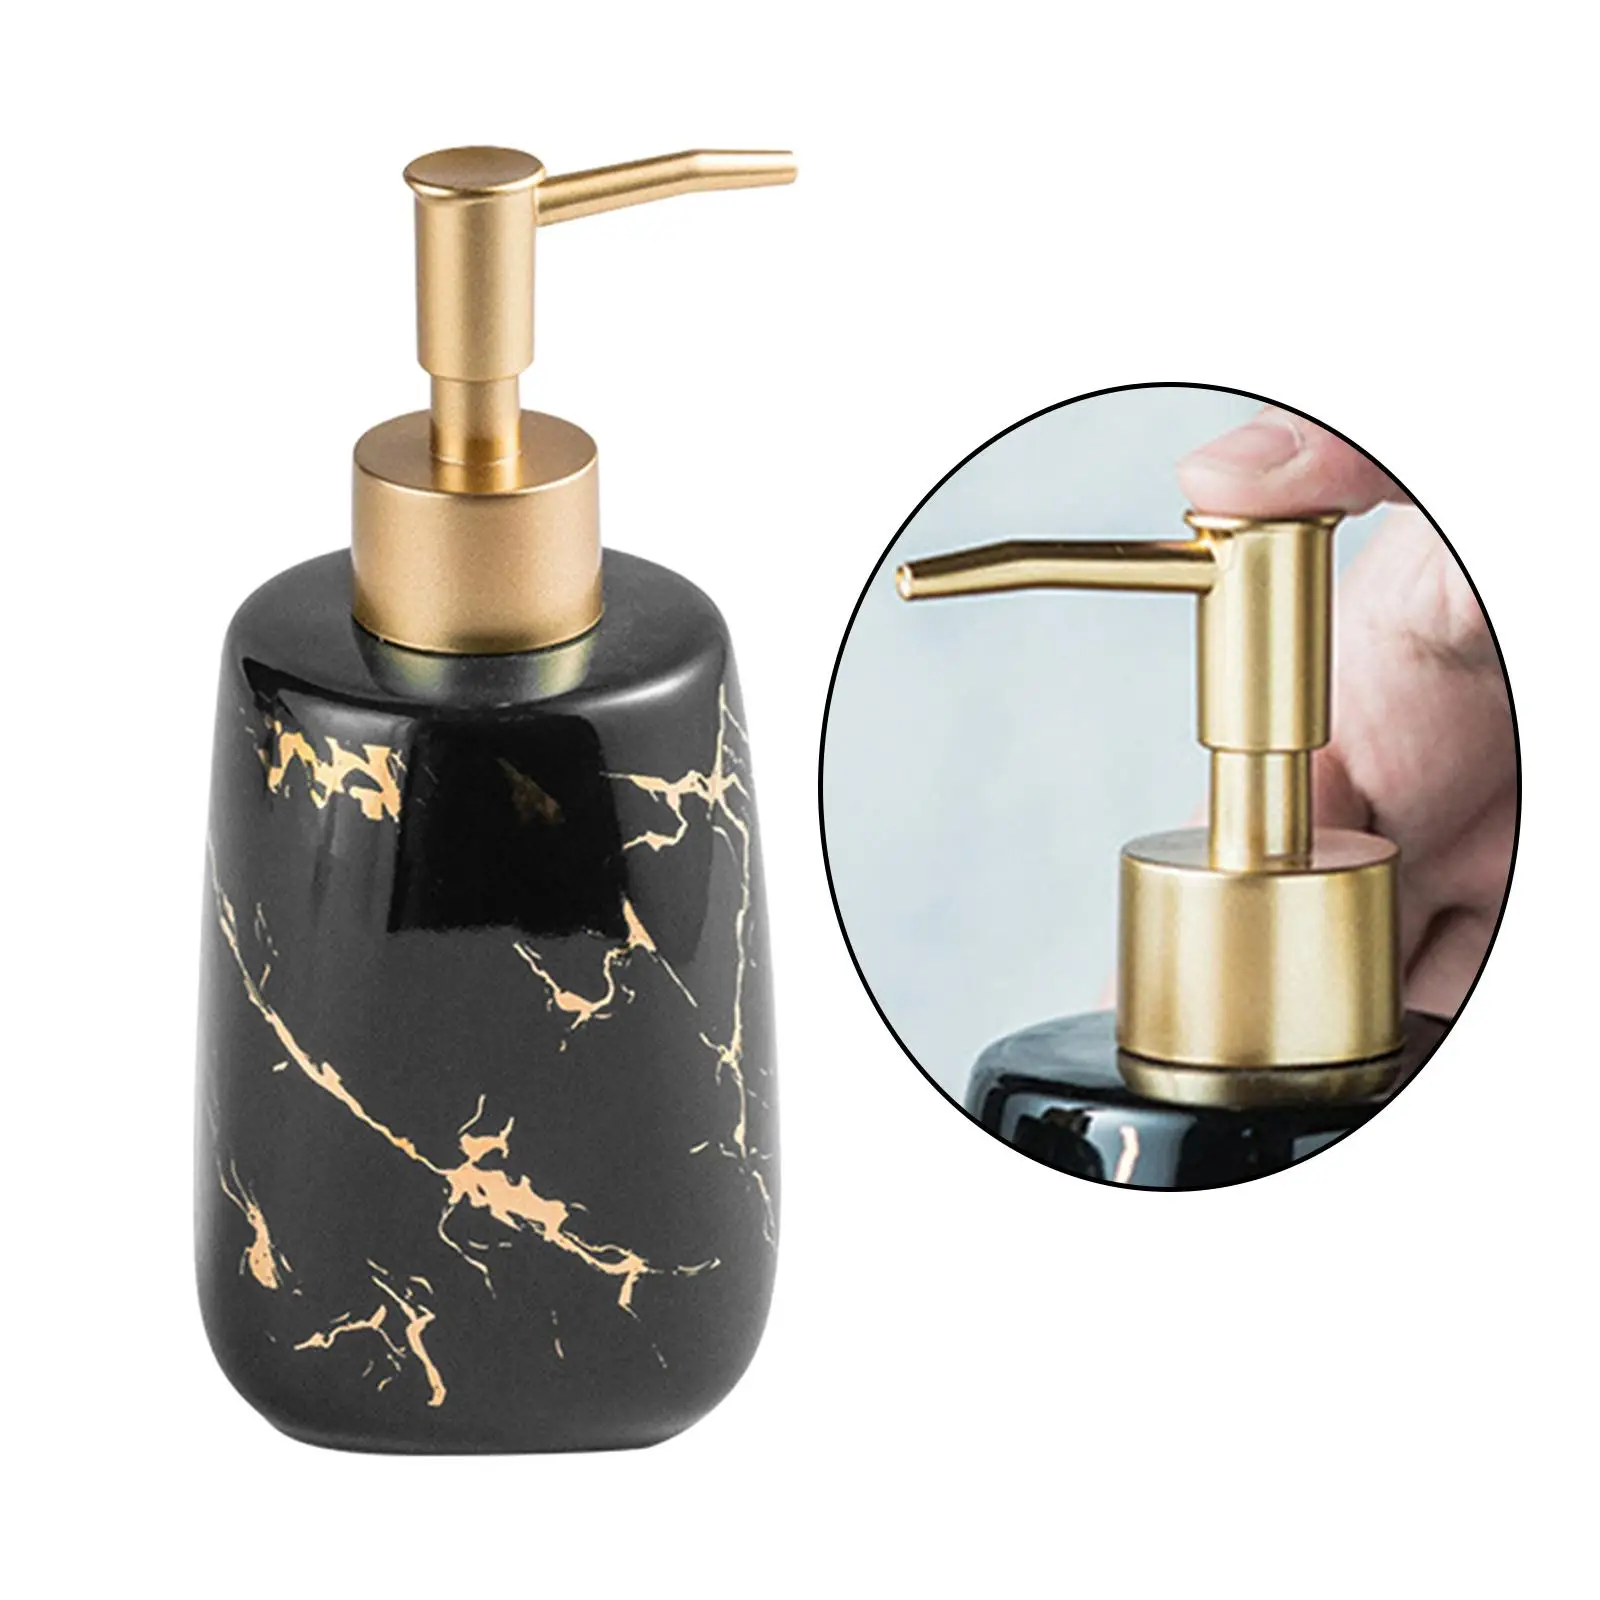 Ceramic Soap Dispenser 350ml Shampoo Pump Bath Lotion Home Bathroom Hand Wash Shower Gel Hand Soap Marbling Refillable Bottle